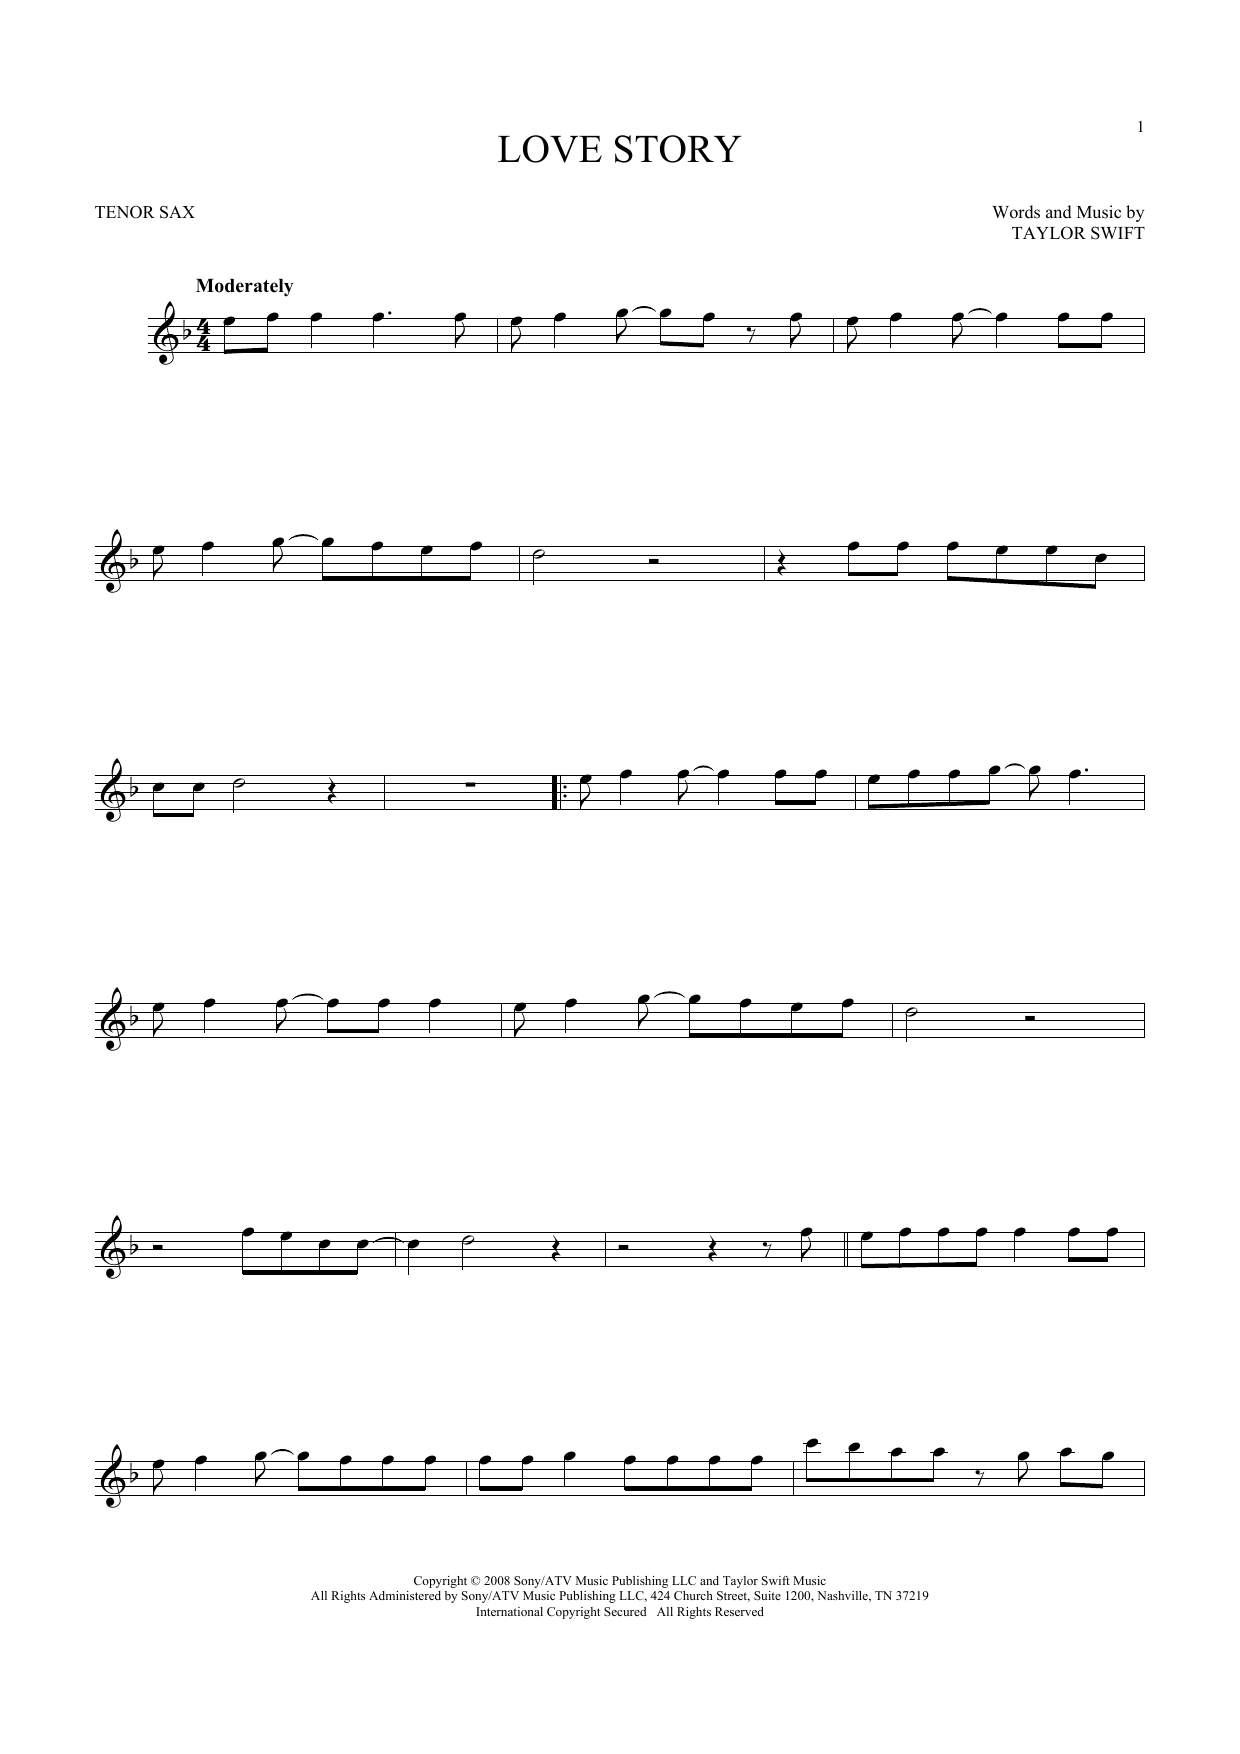 Taylor Swift Love Story Sheet Music Notes Chords Download Printable Tenor Saxophone Sku 180645